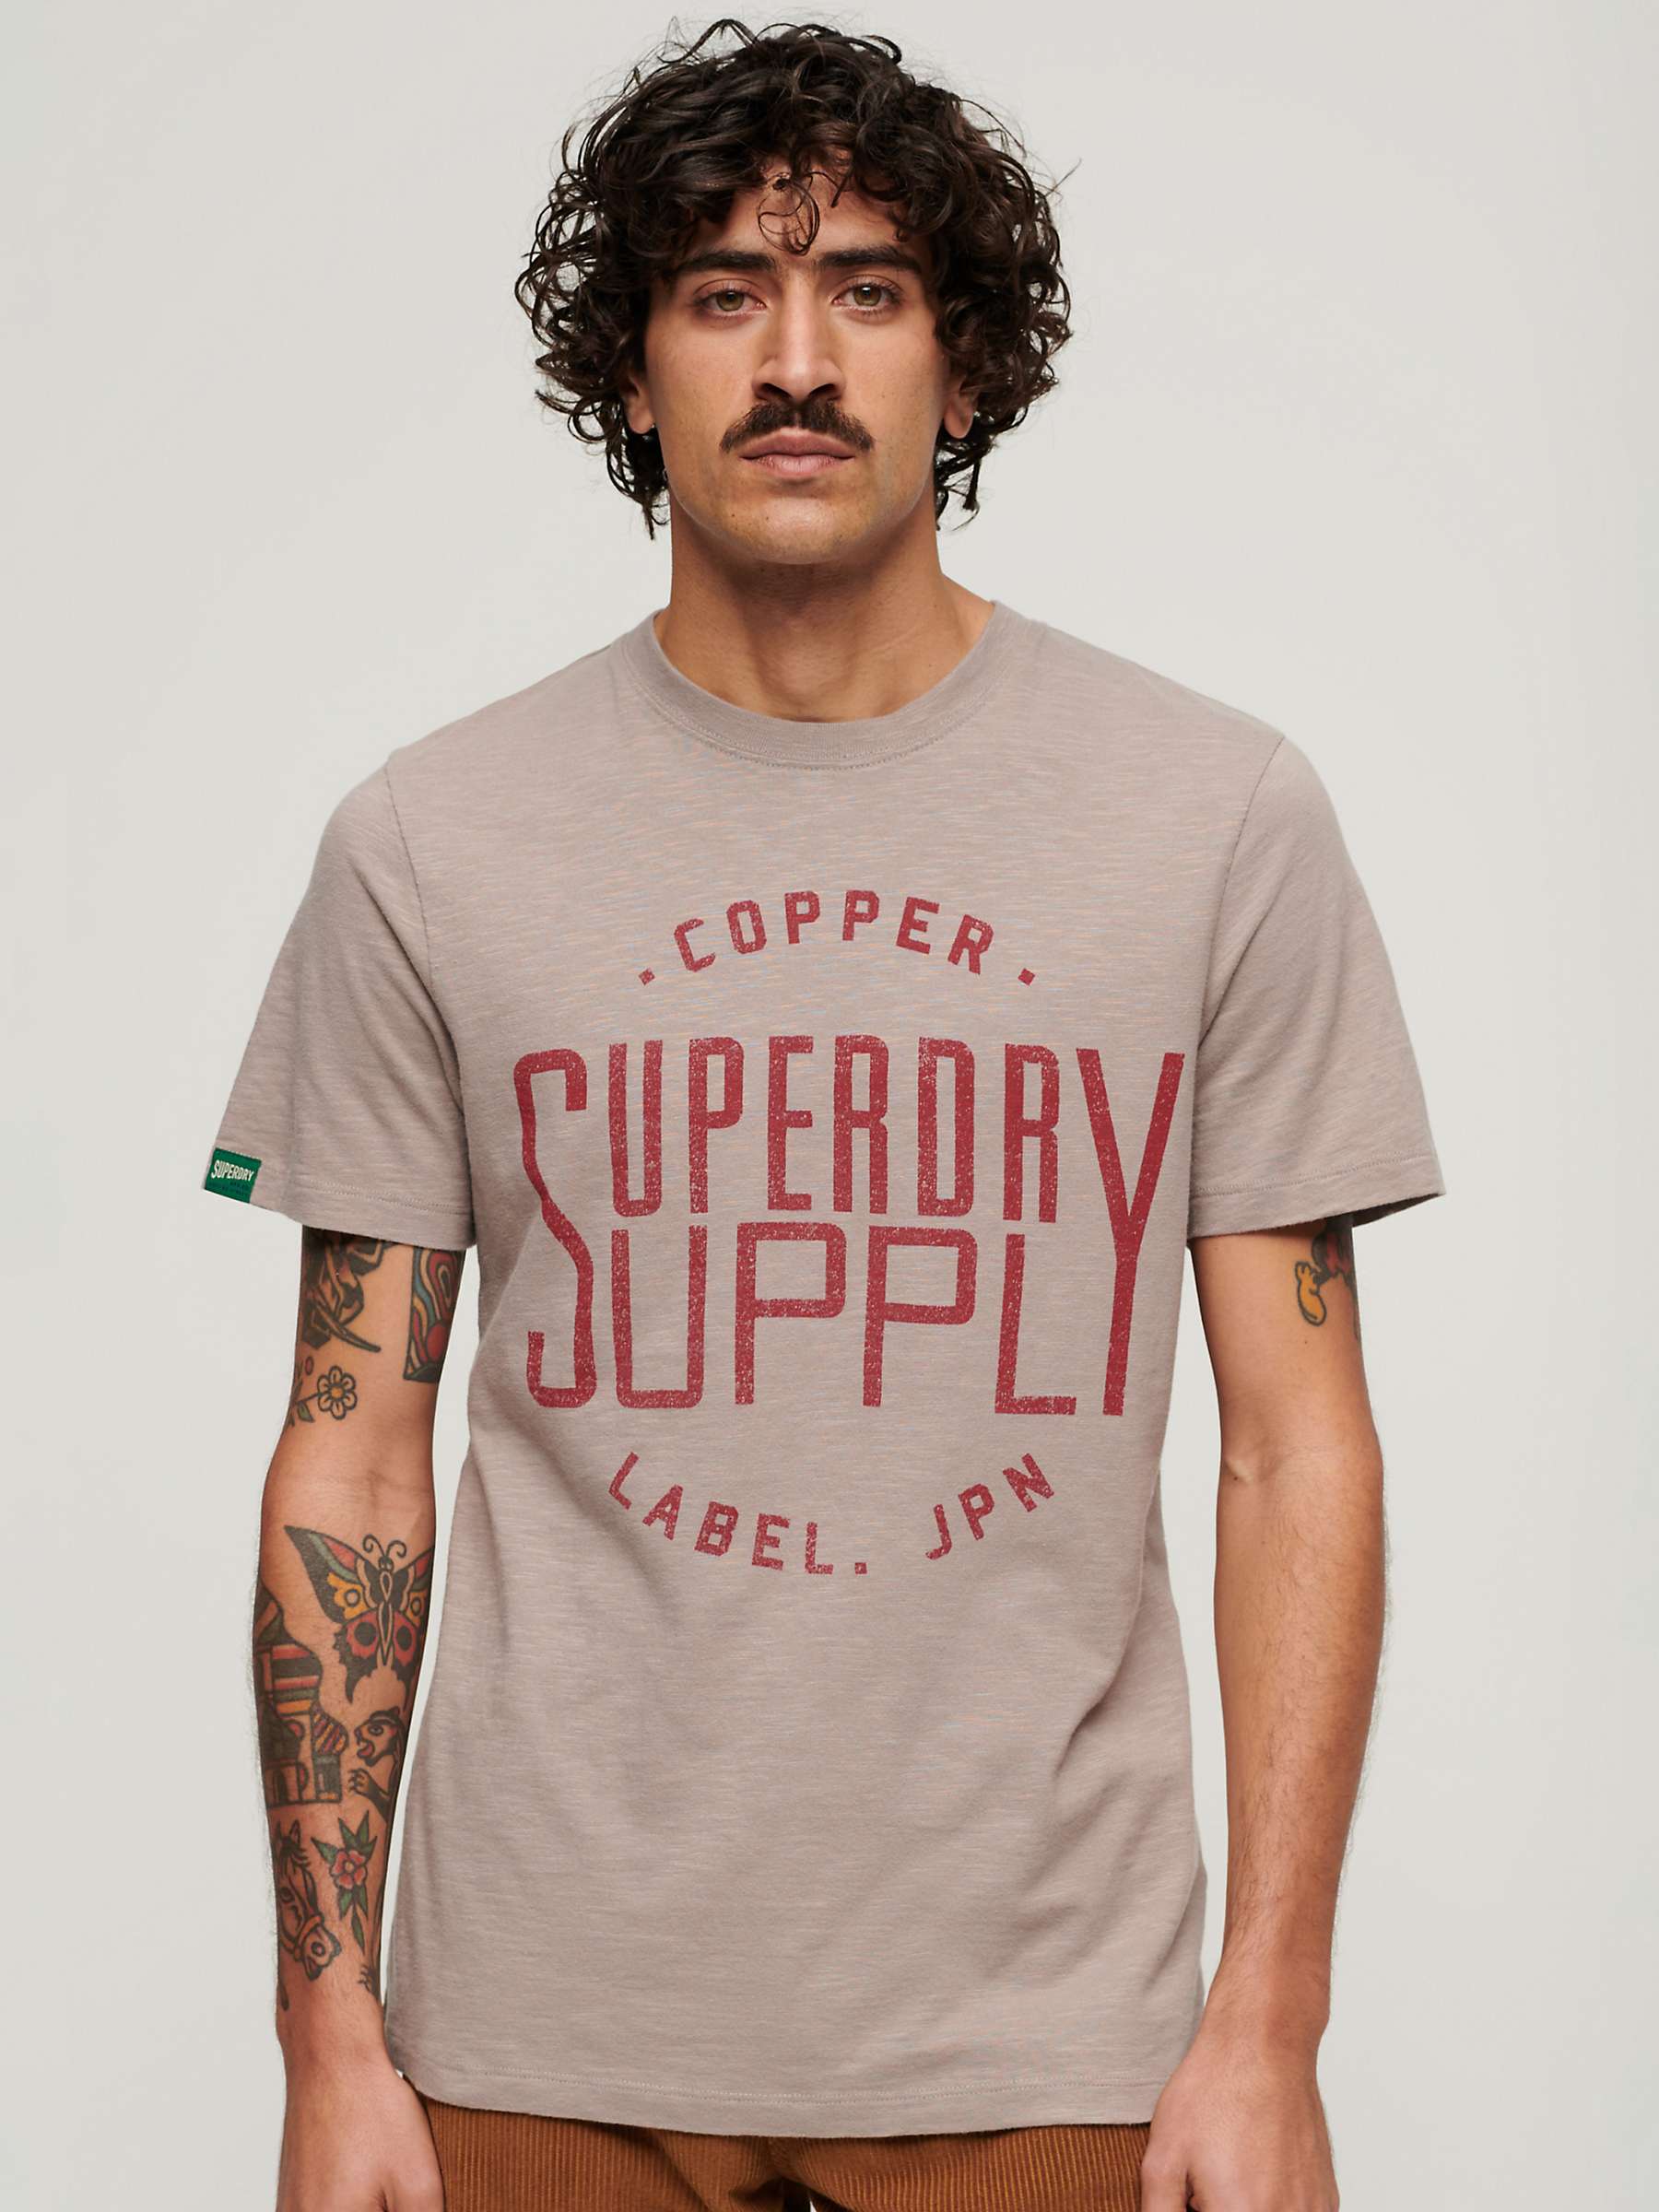 Buy Superdry Copper Label Workwear T-Shirt Online at johnlewis.com